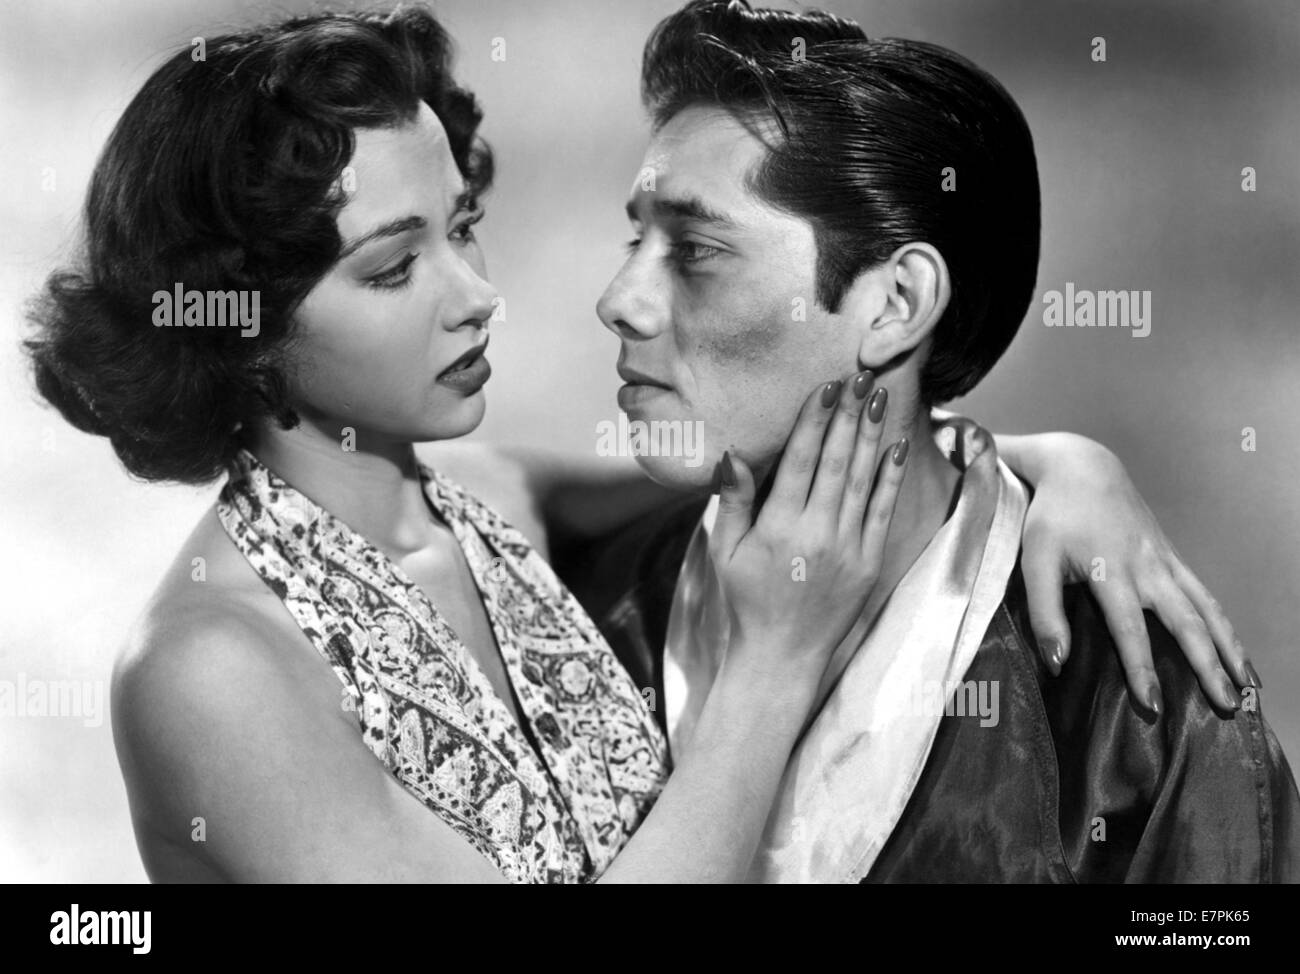 DER RING 1952 King Brothers Productions Film mit Rita Moreno und Lalo Rios Stockfoto